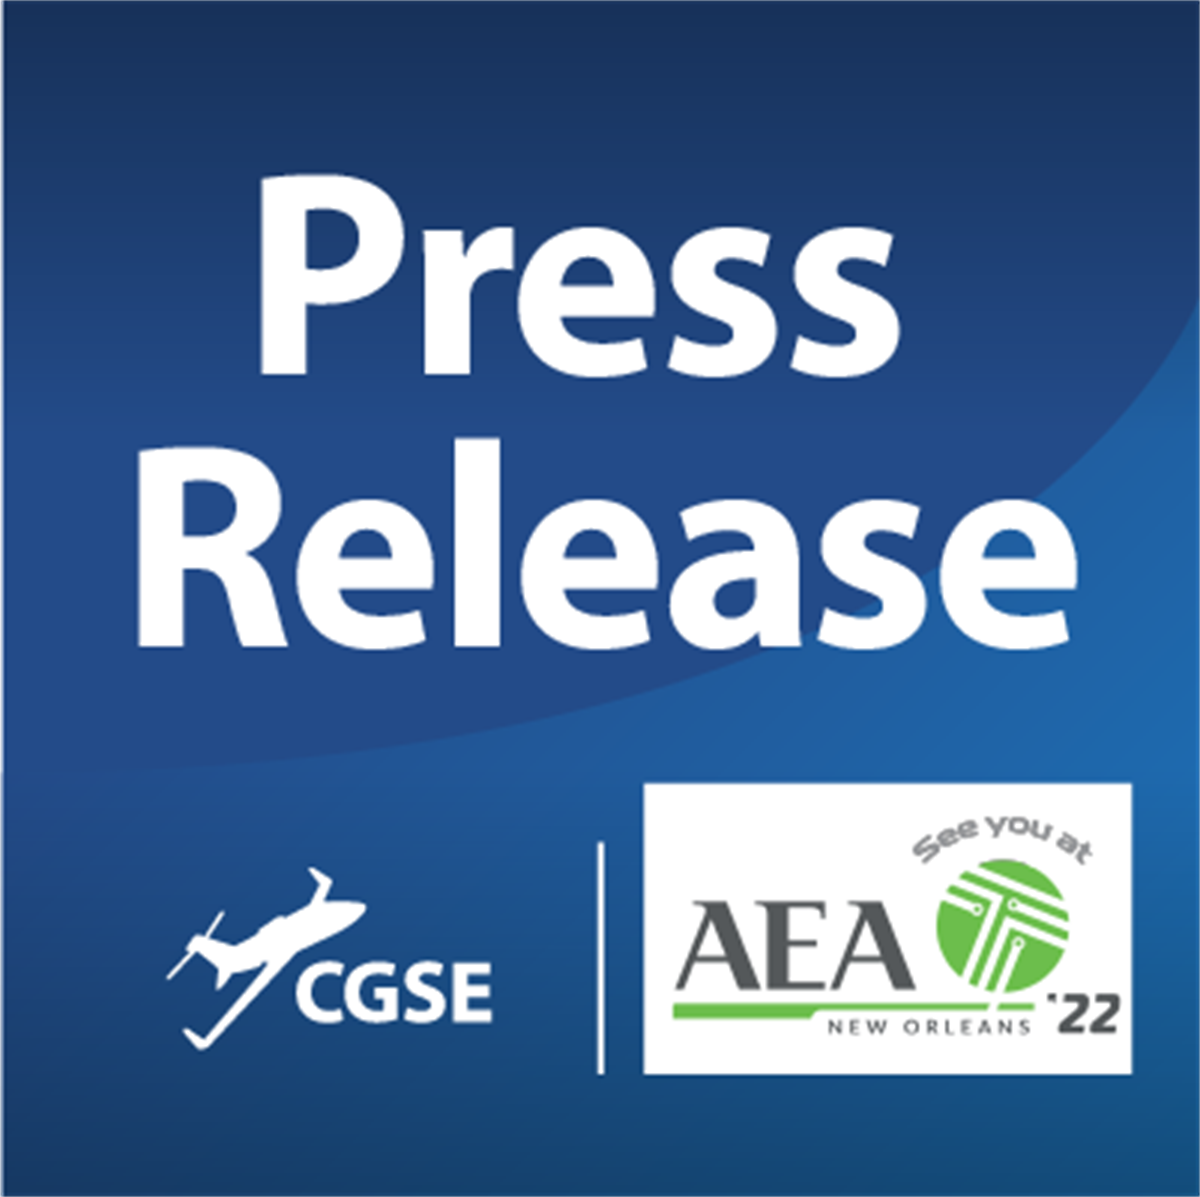 CAROLINA GSE TO ATTEND 2022 AEA INTERNATIONAL CONVENTION & TRADE SHOW